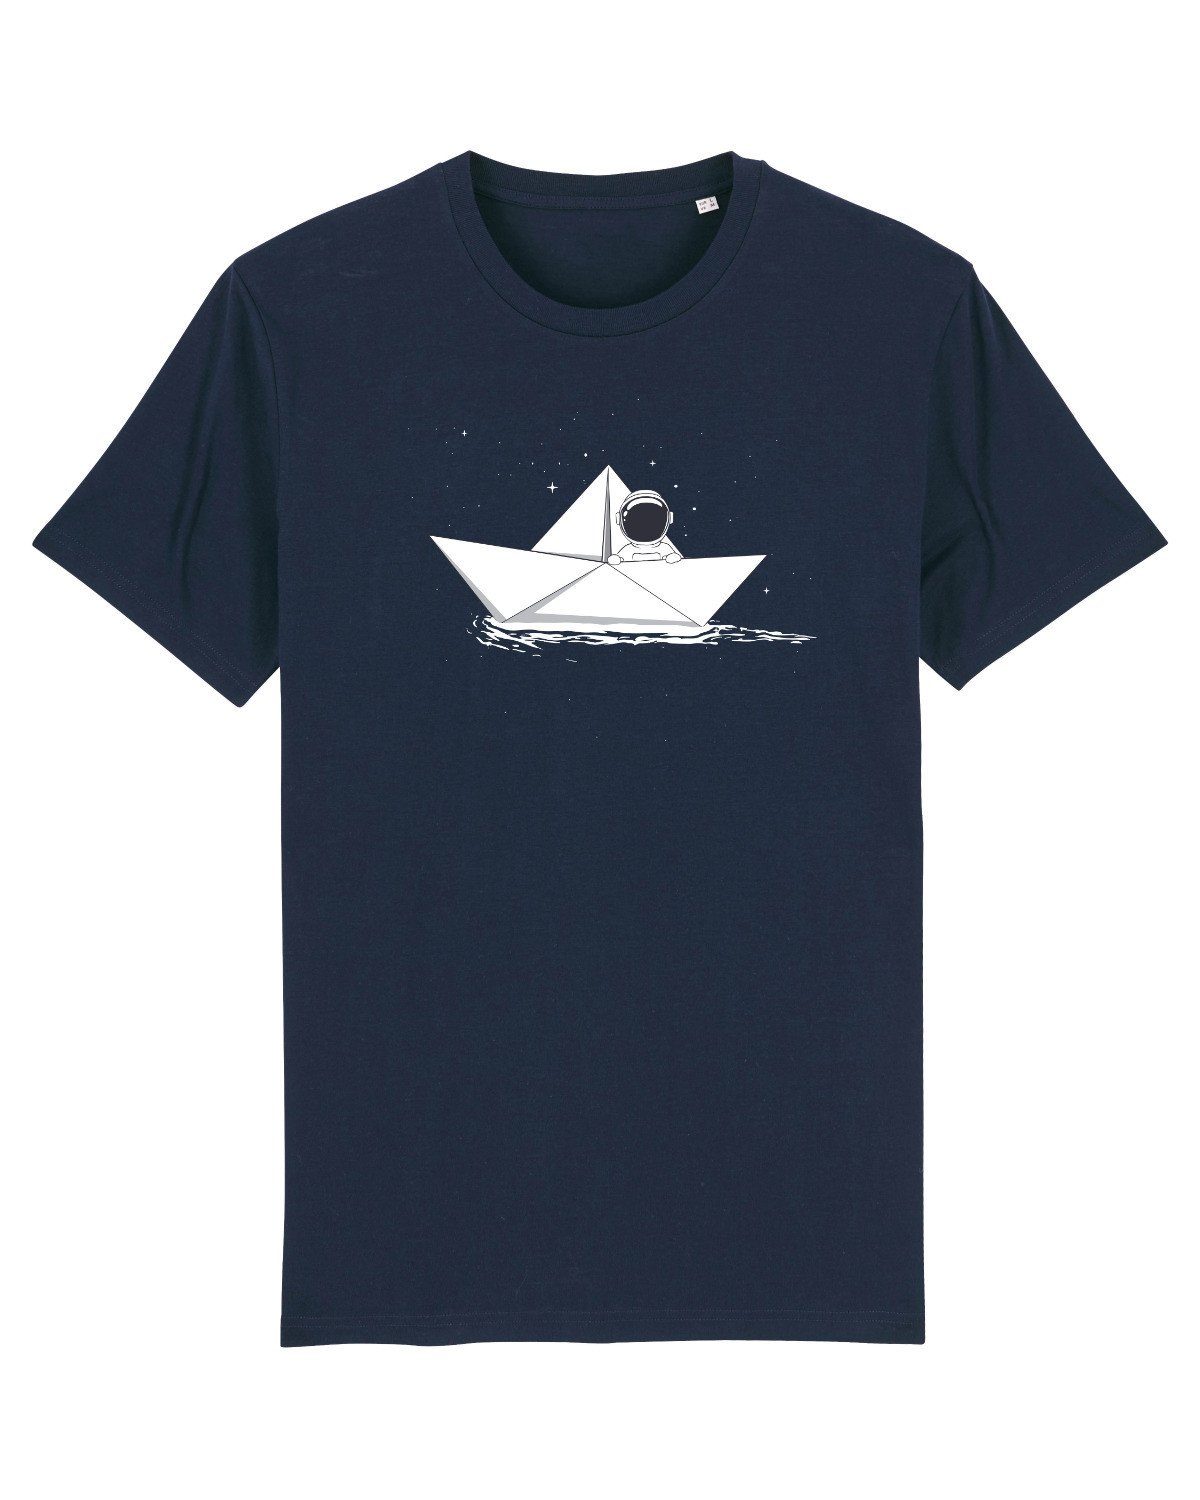 Apparel wat? (1-tlg) in paper boat Astronaut dunkelblau Print-Shirt